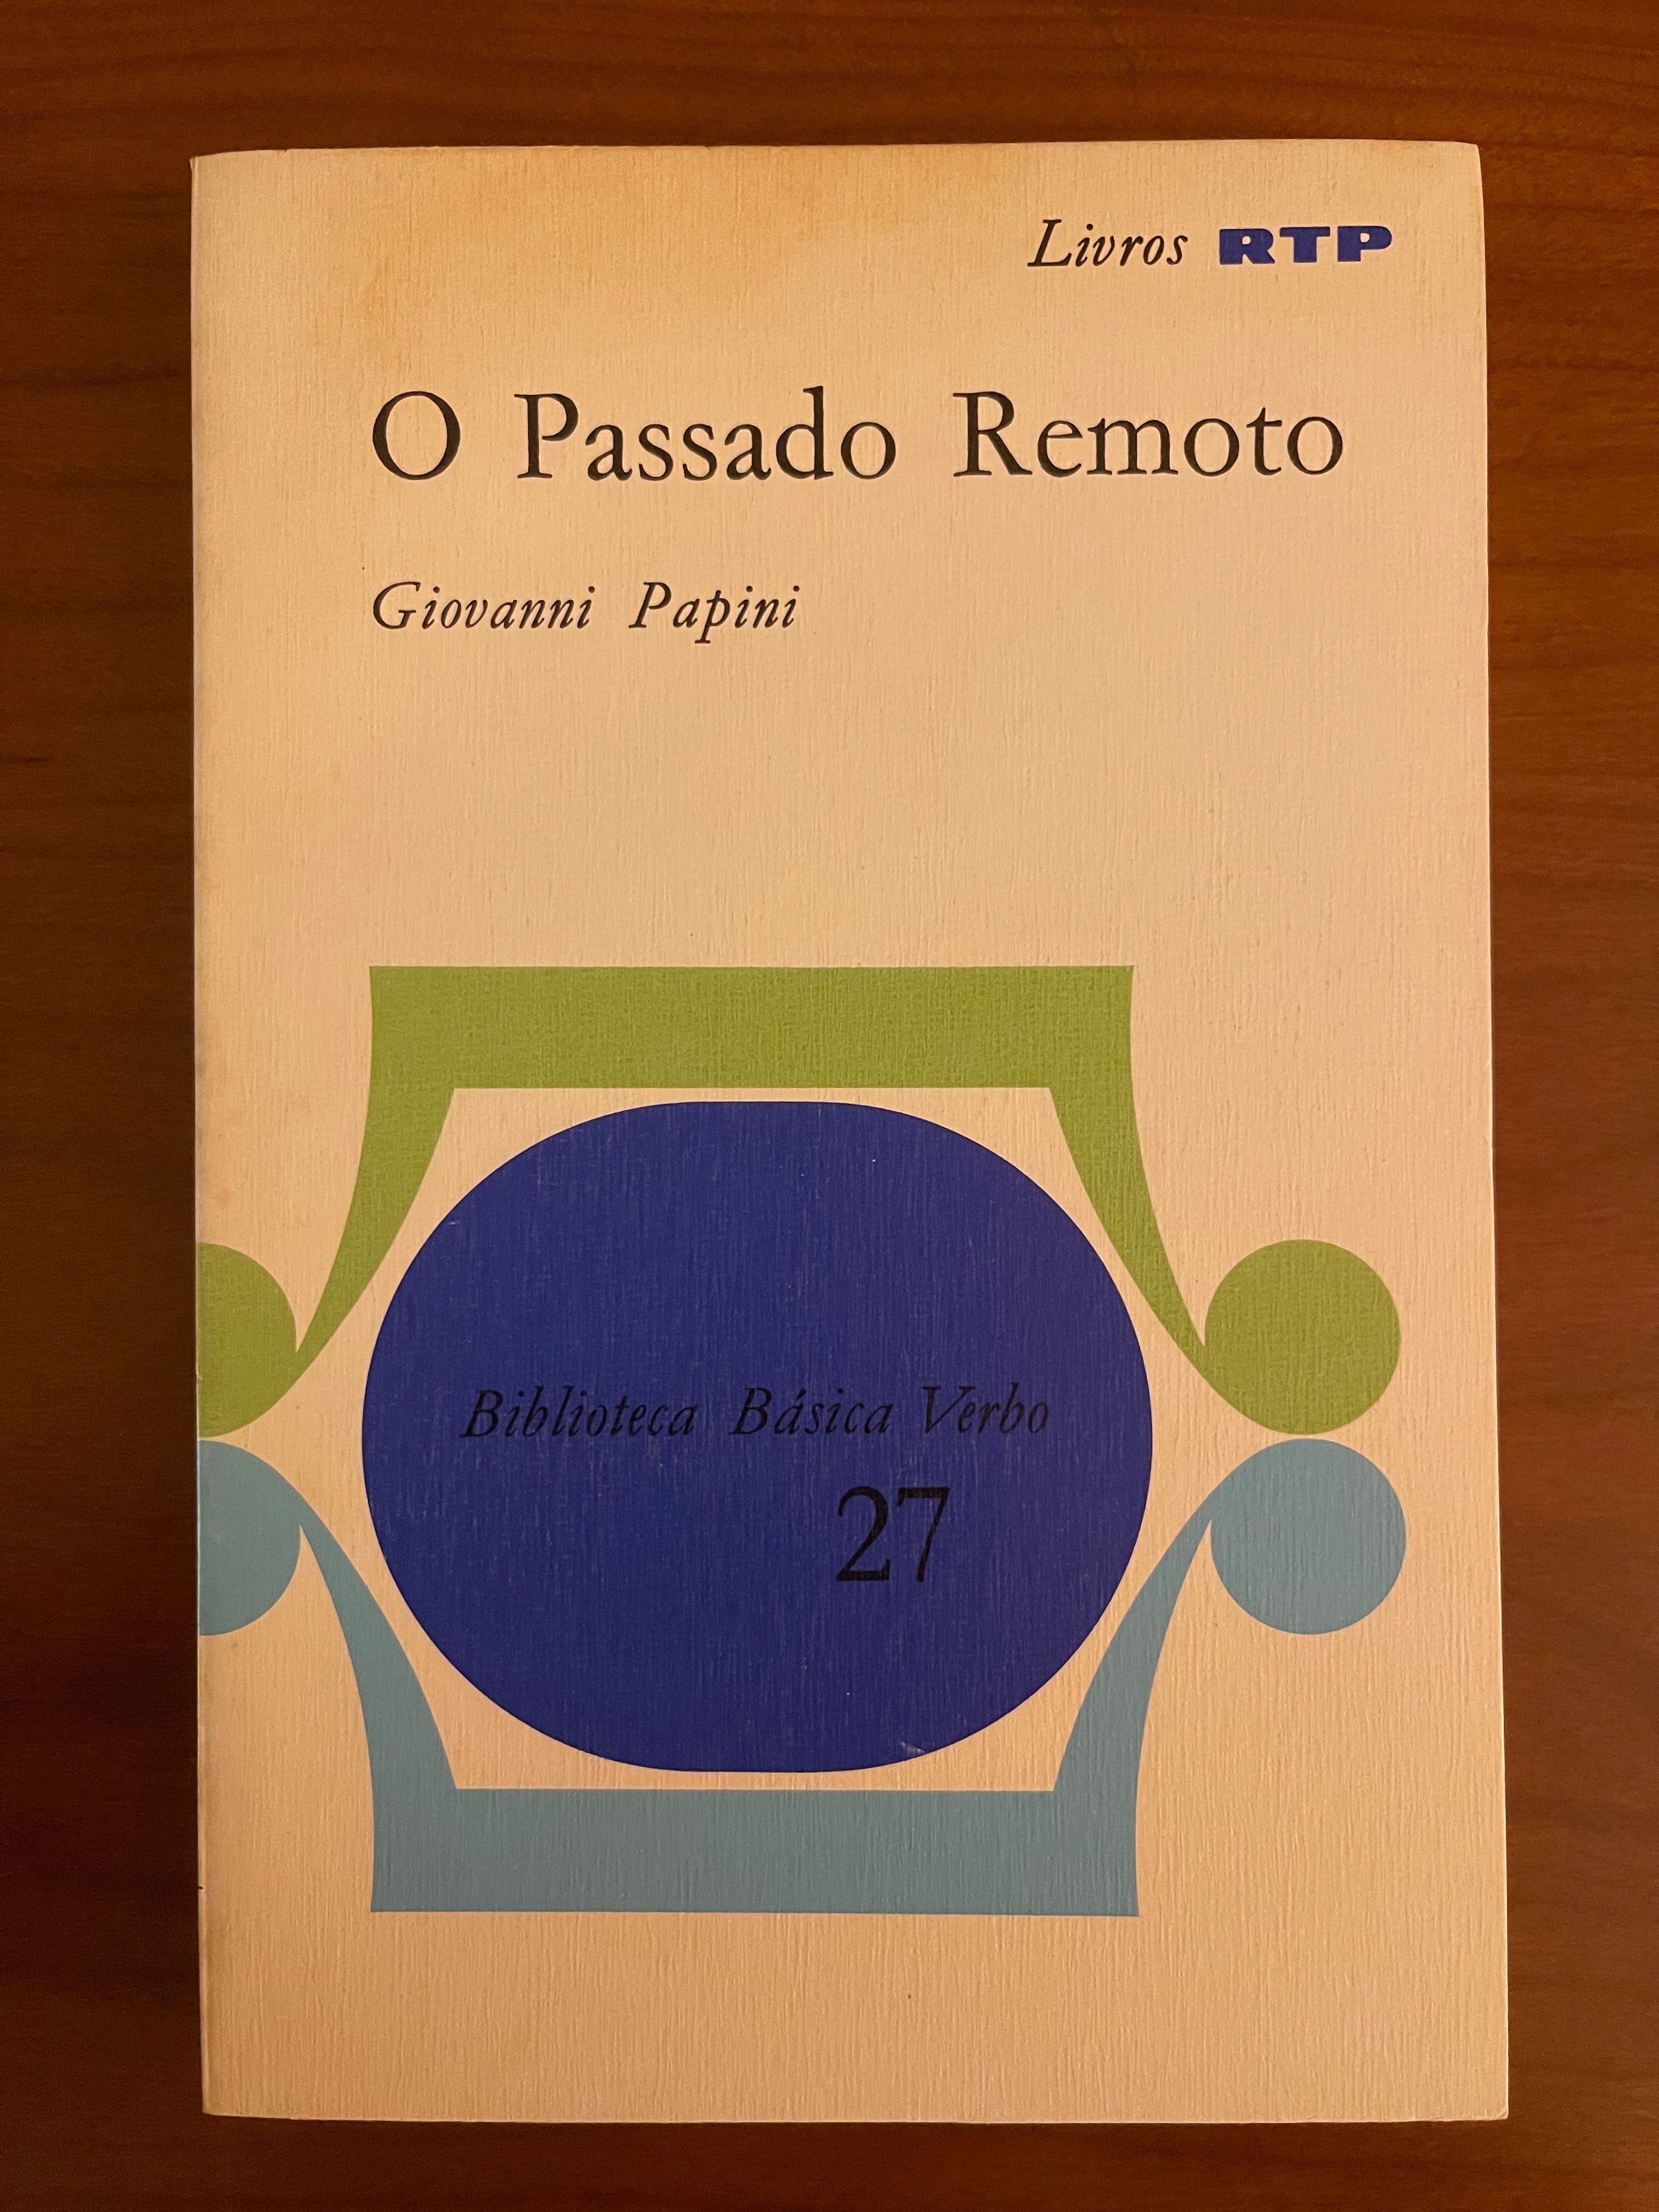 "O Passado Remoto", de Giovanni Papini